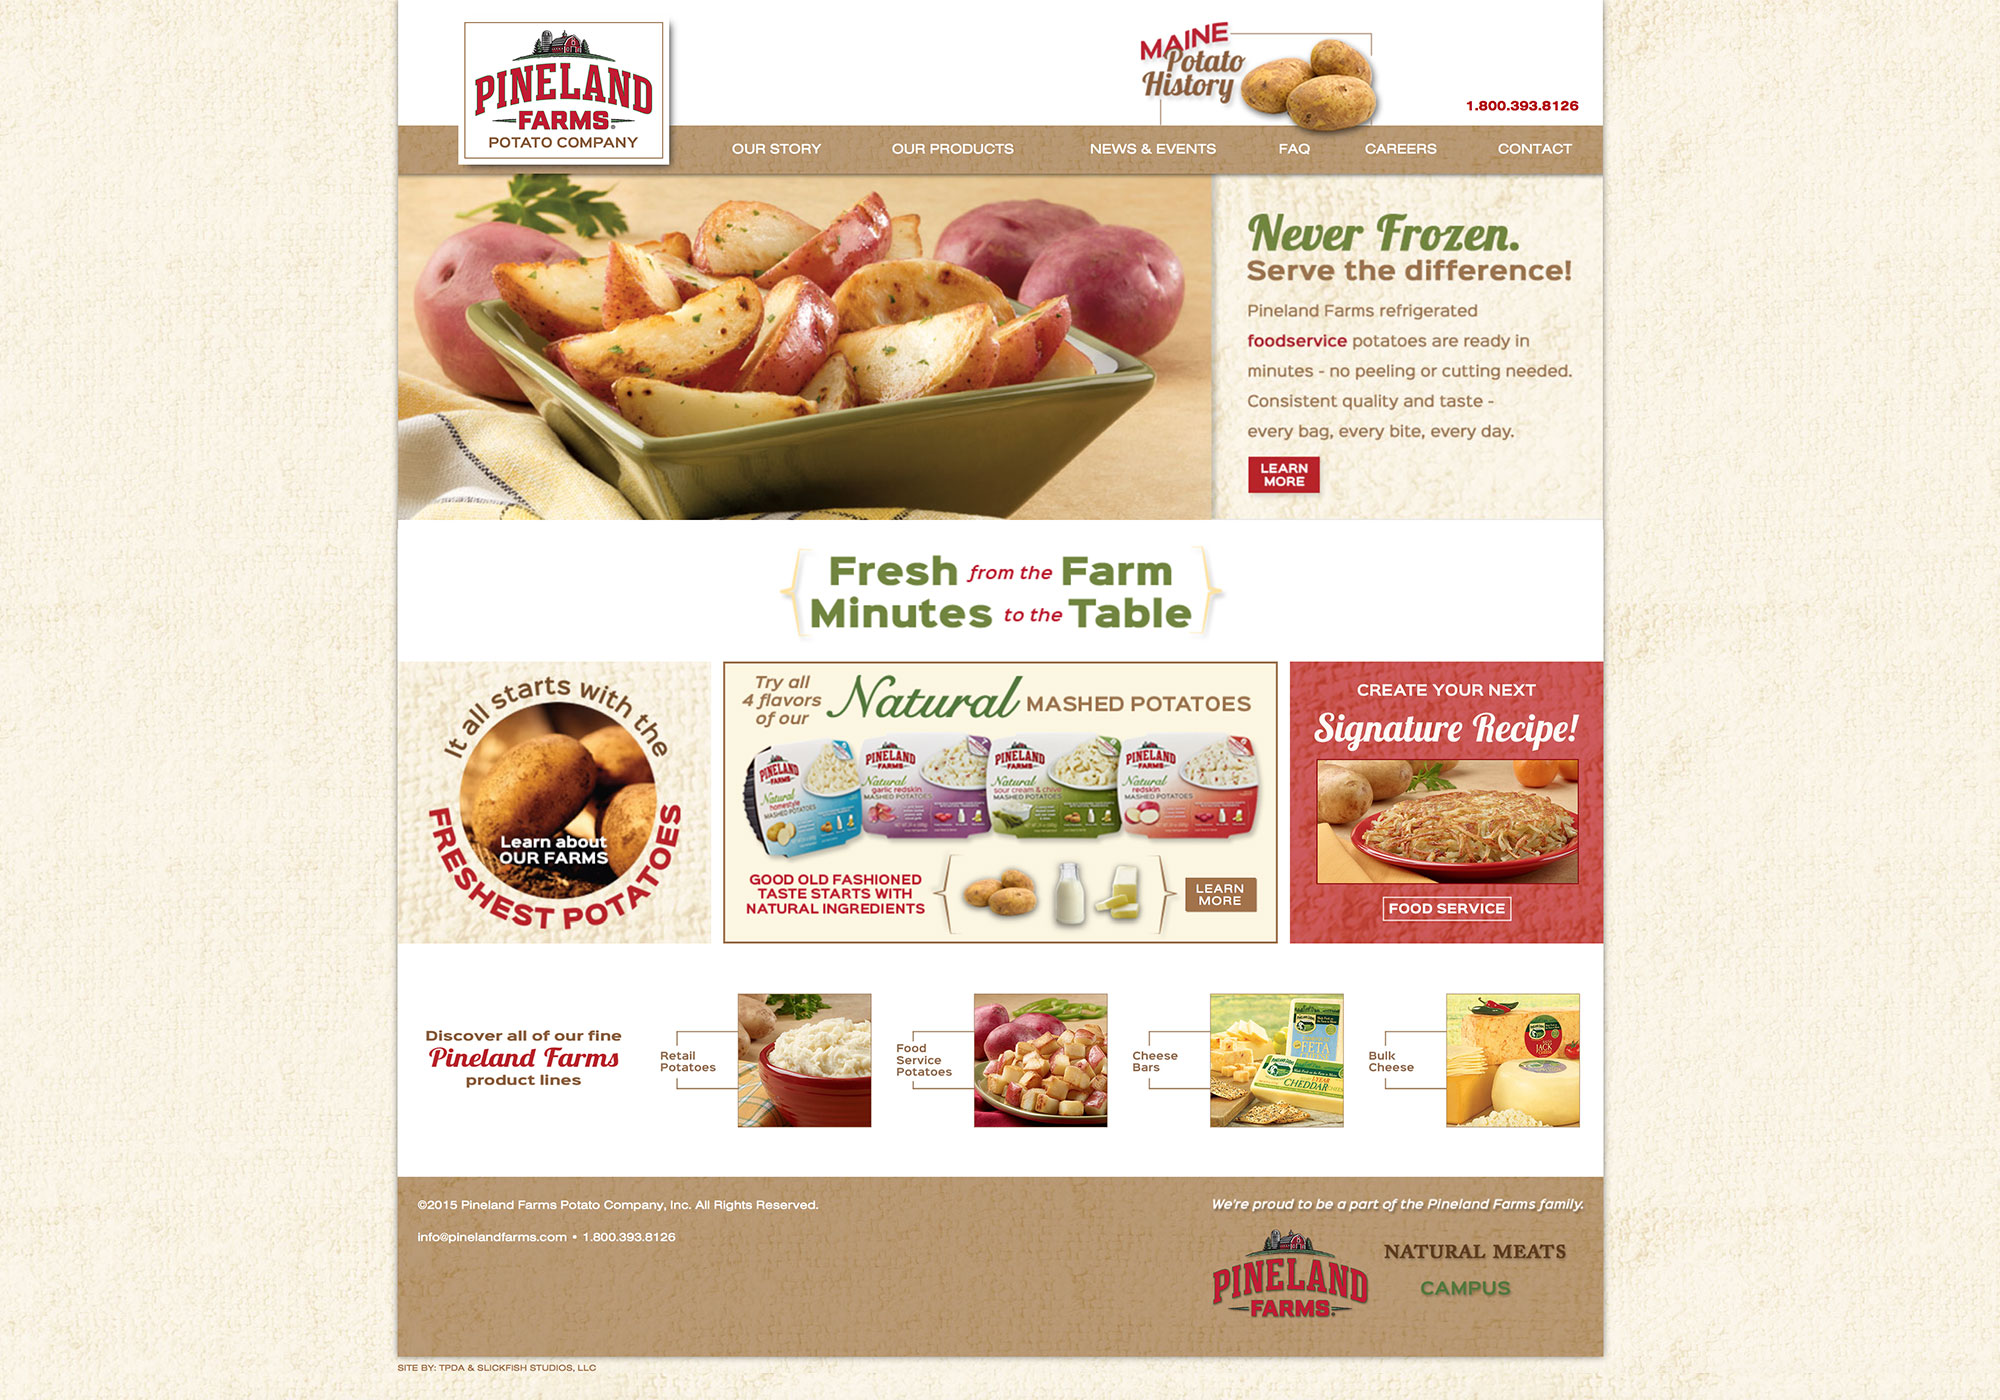 A screenshot of the SlickFish Studios designed and developed website for the Pineland Farms Potato Company.